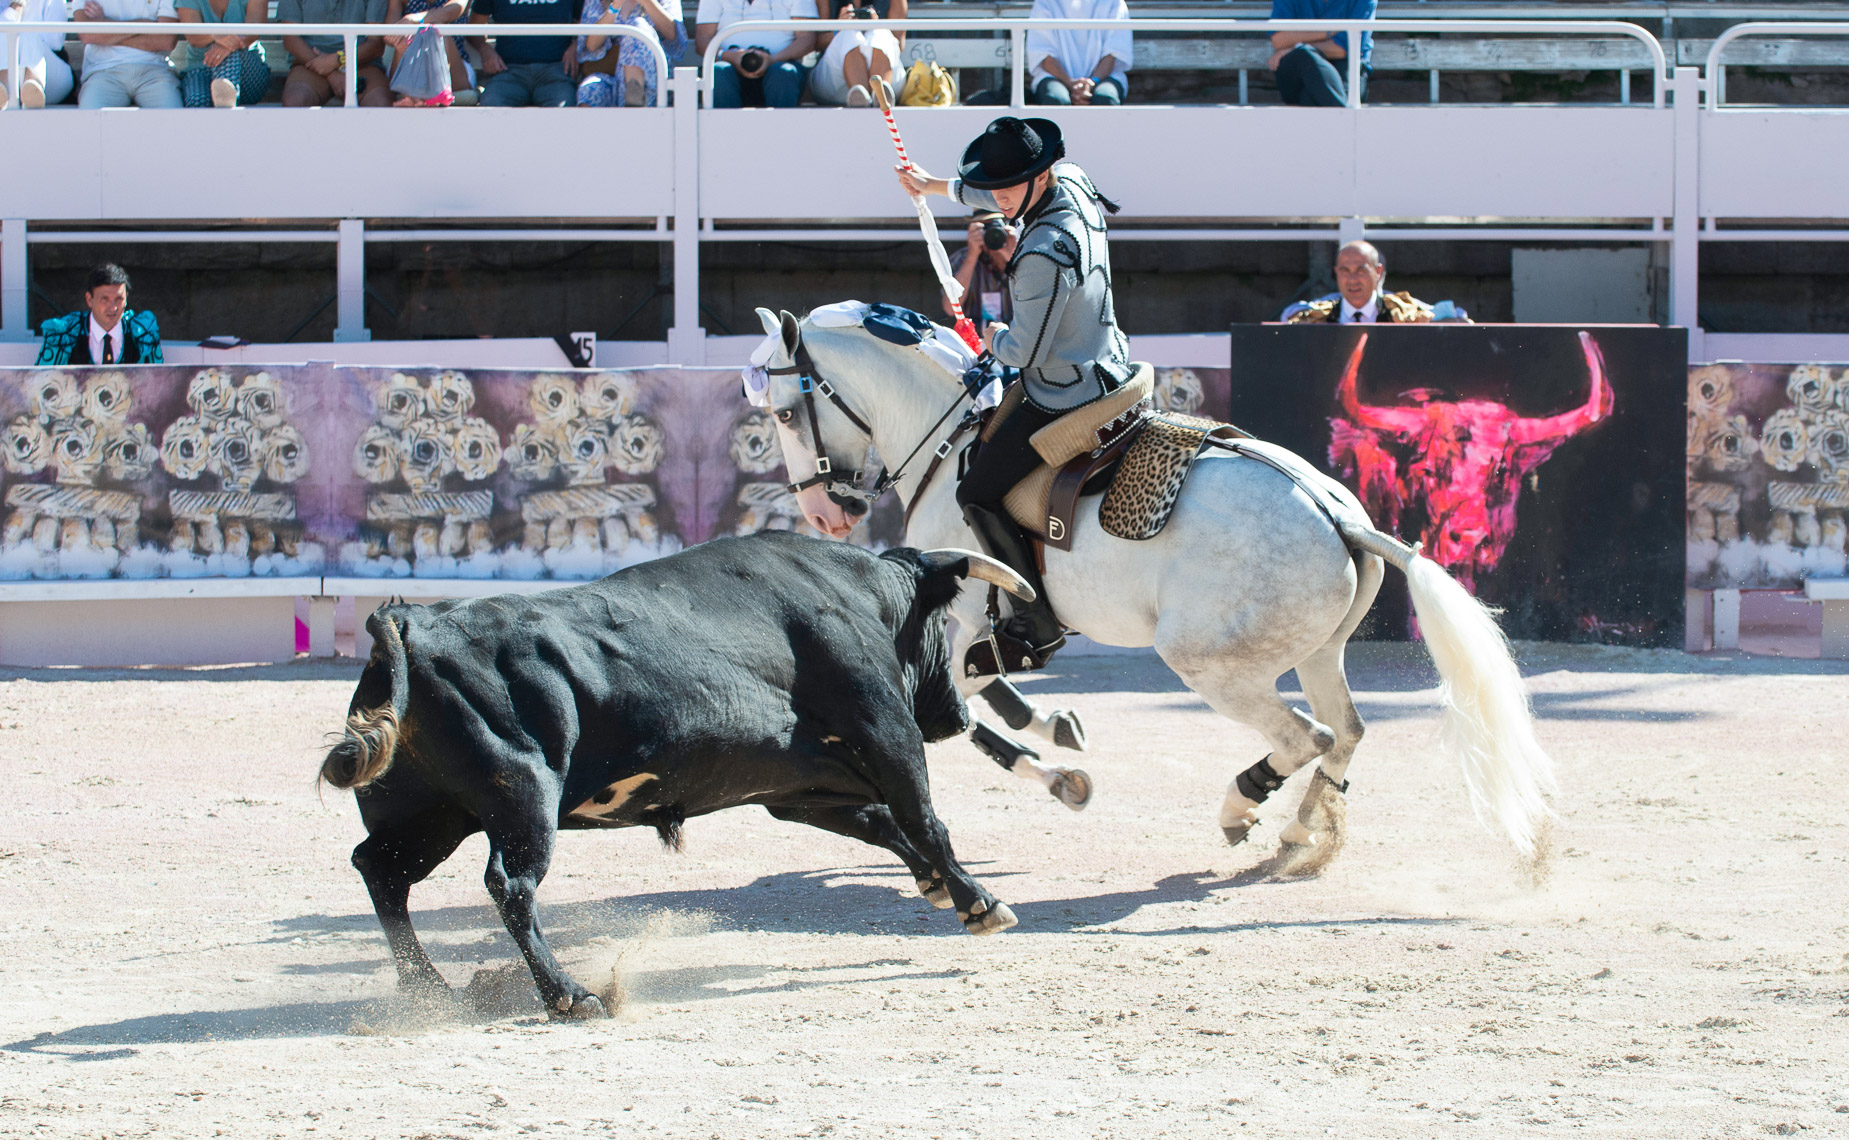 TP_1-153.  Rejoineadores fighting bulls from horseback in Arles, France. 